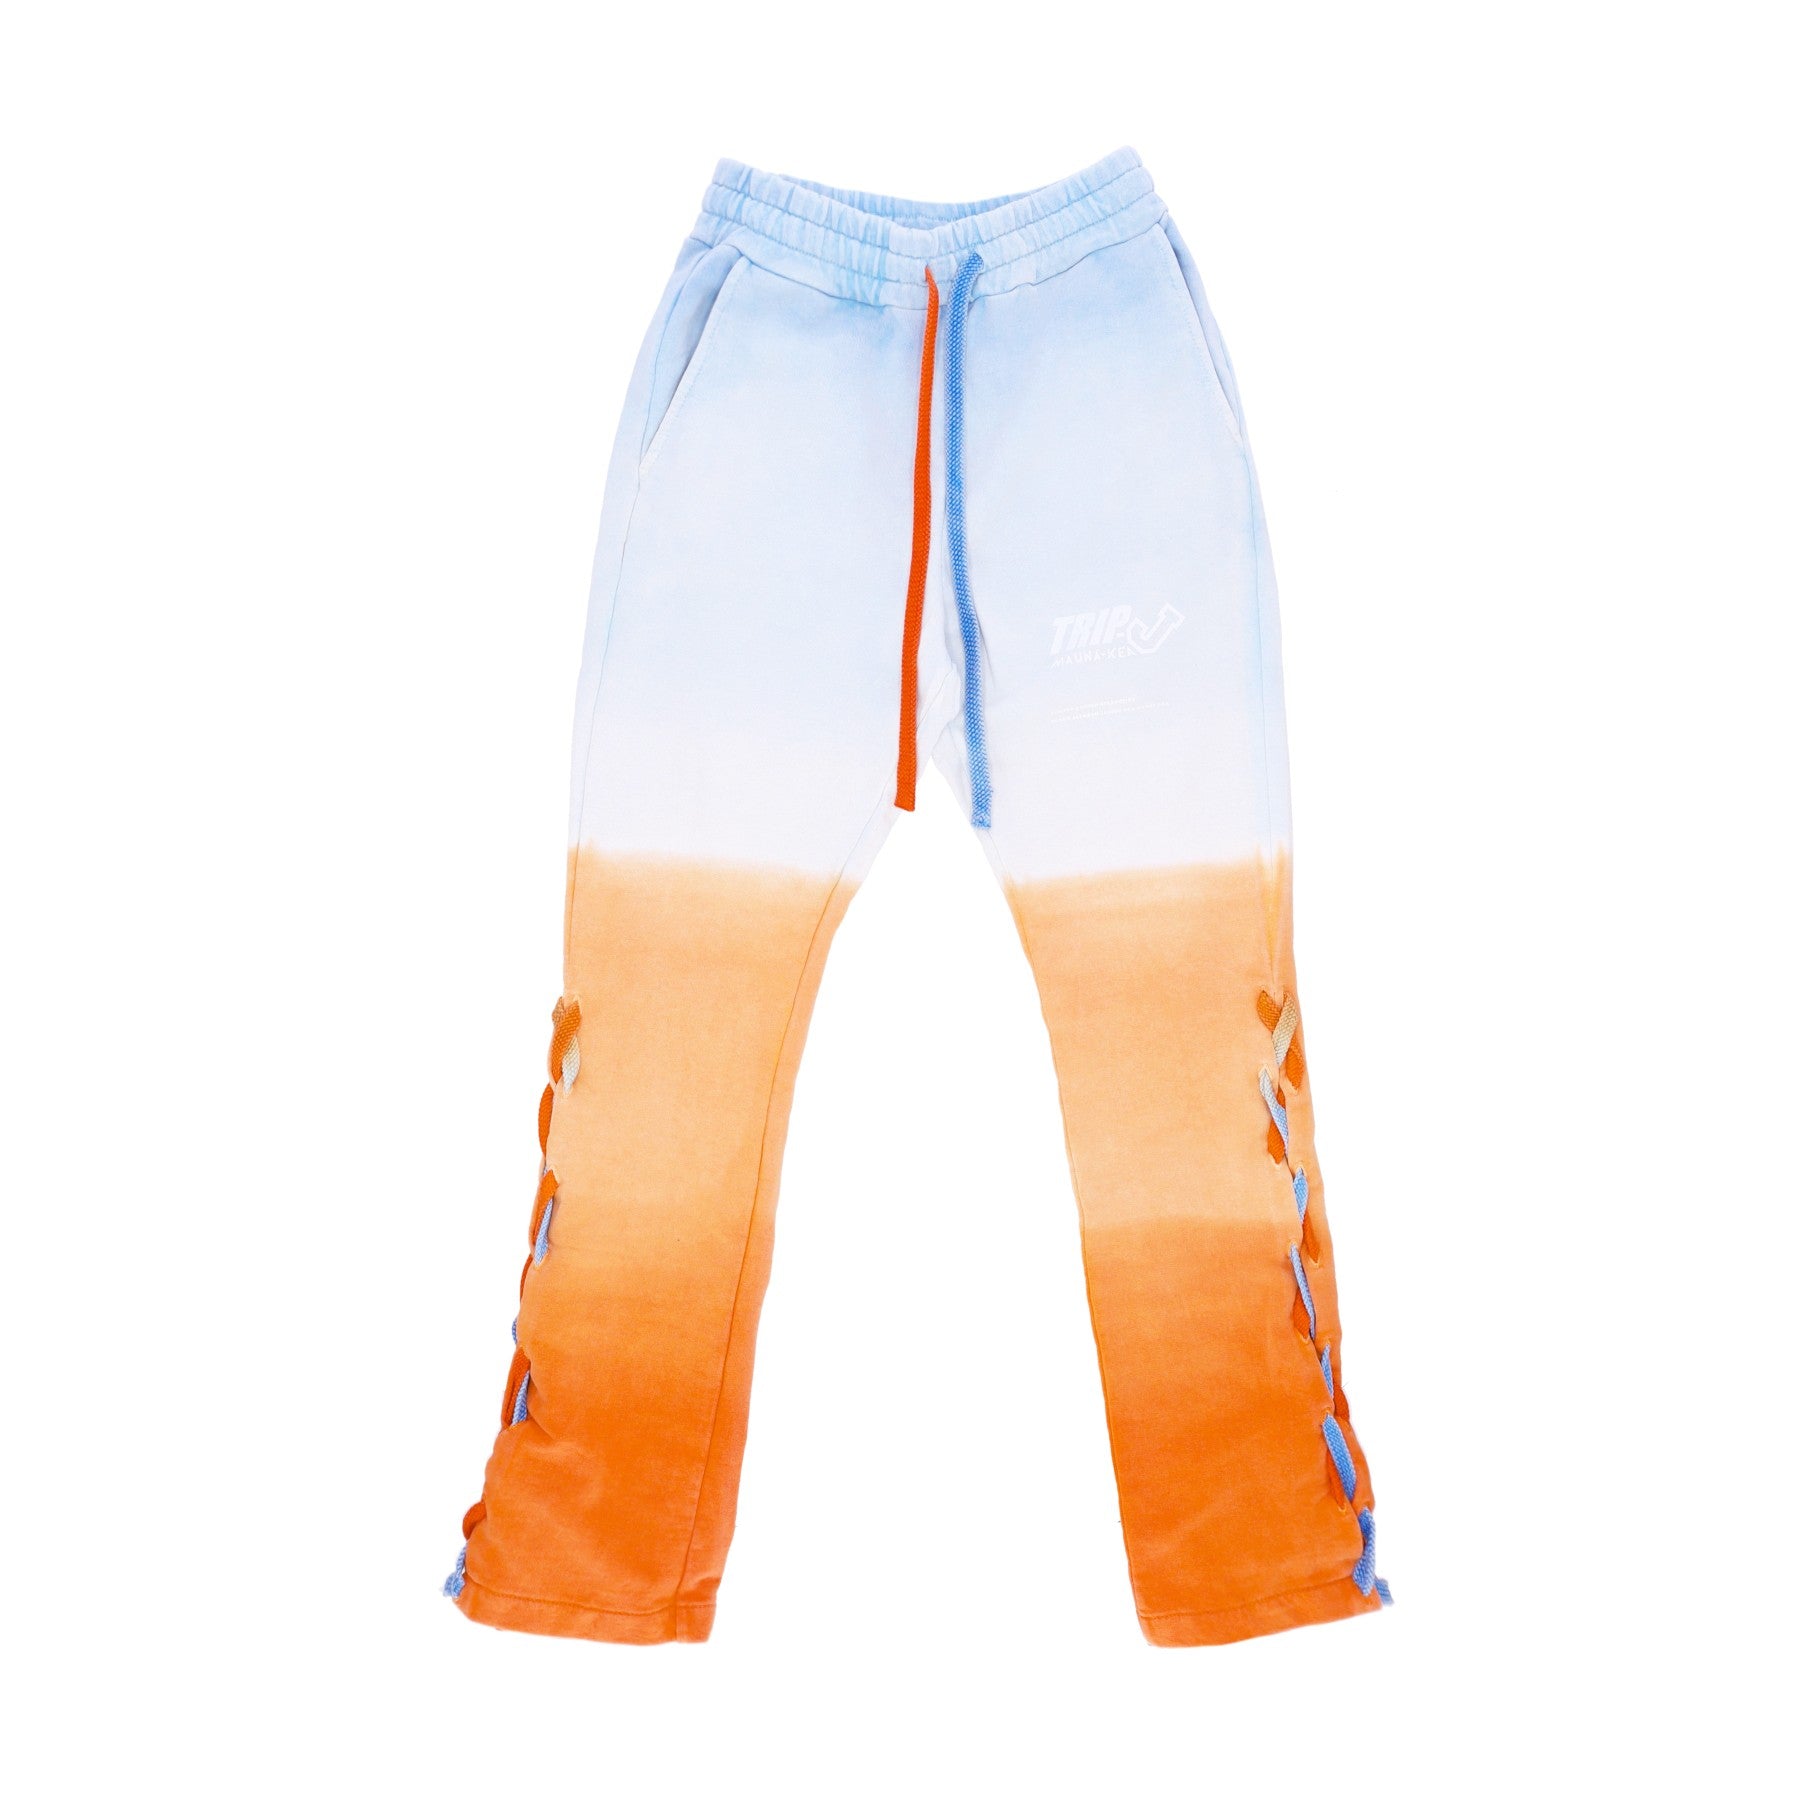 Mauna-kea, Pantalone Tuta Leggero Uomo Degrade' Flare Pants X Triple J, Cyan/orange